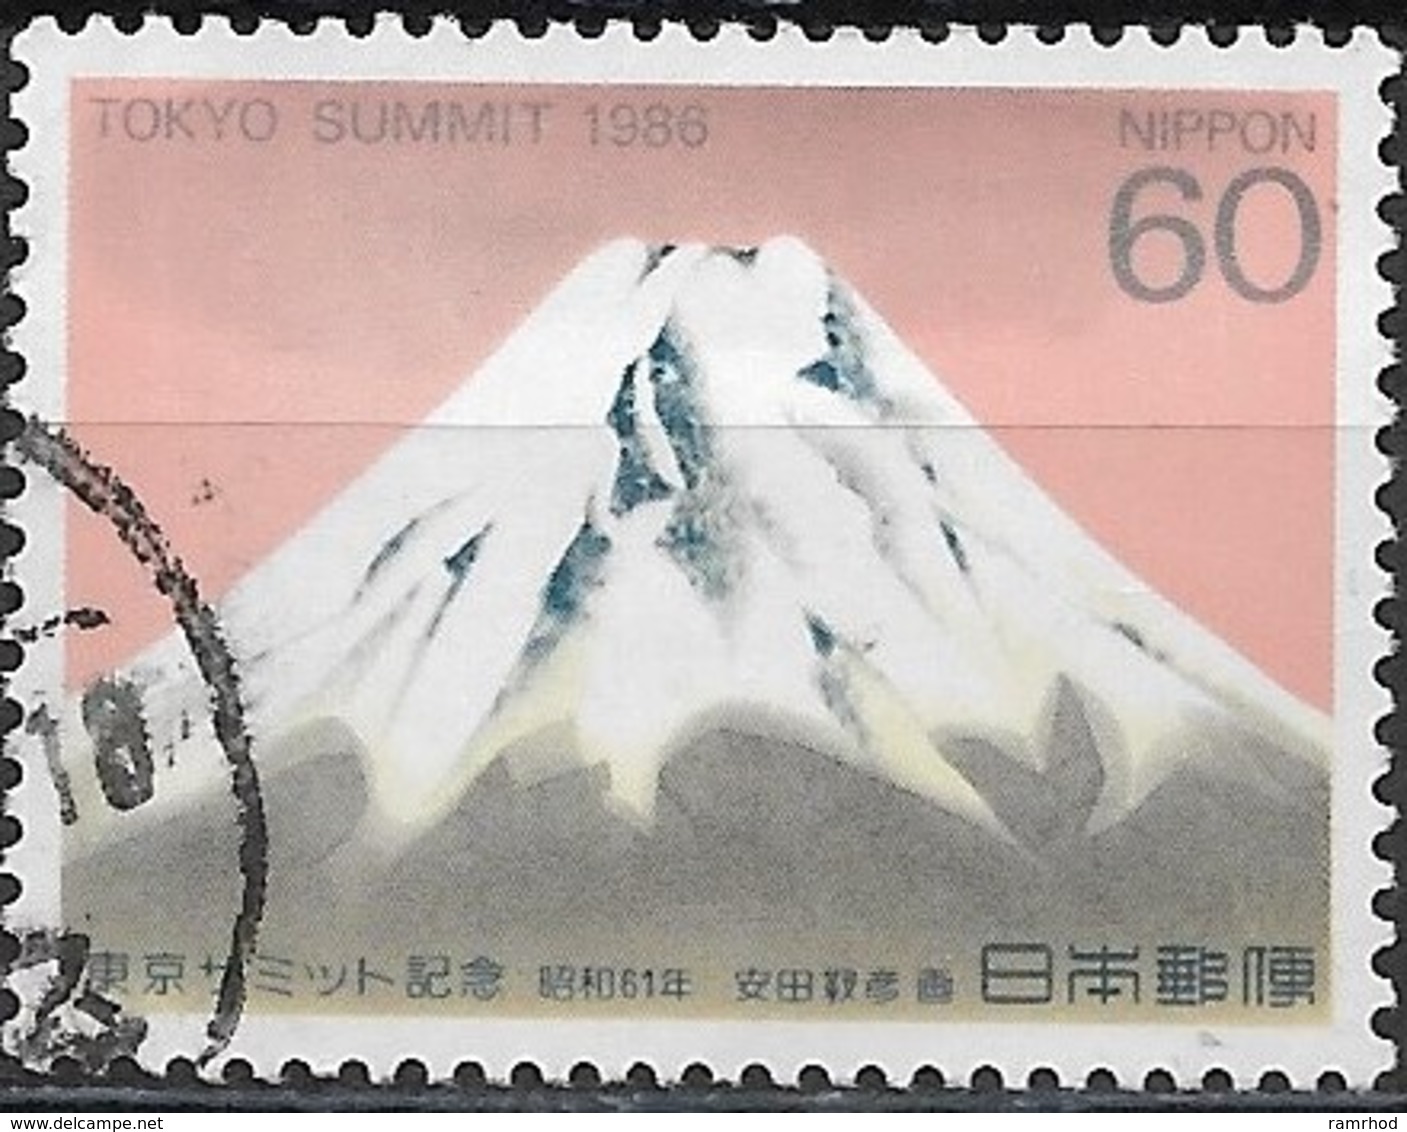 JAPAN 1986 12th Economic Summit Of Industrialized Countries, Tokyo - 60y Mt. Fuji In Early Morning (Yukihiko Yasuda) FU - Oblitérés